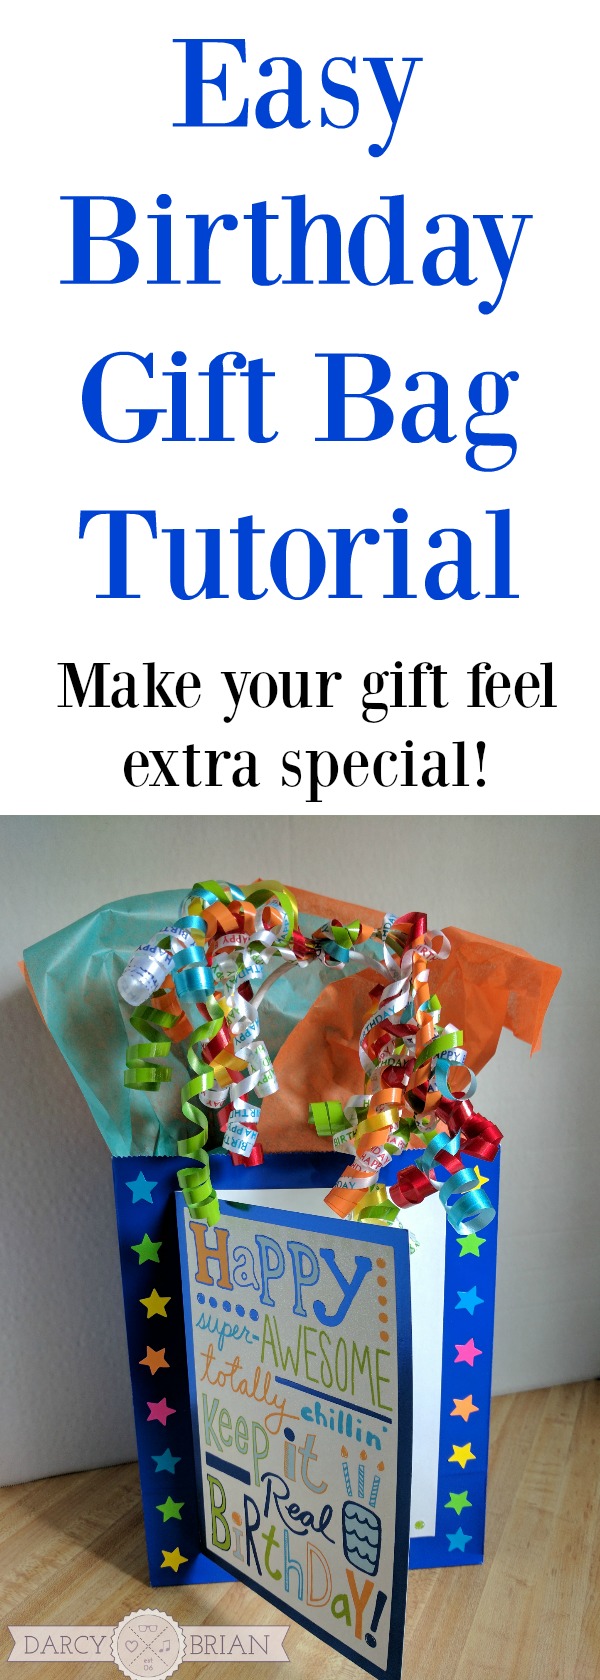 25 DIY Gift Bag Ideas You Can Make Easily - DIYnCrafty